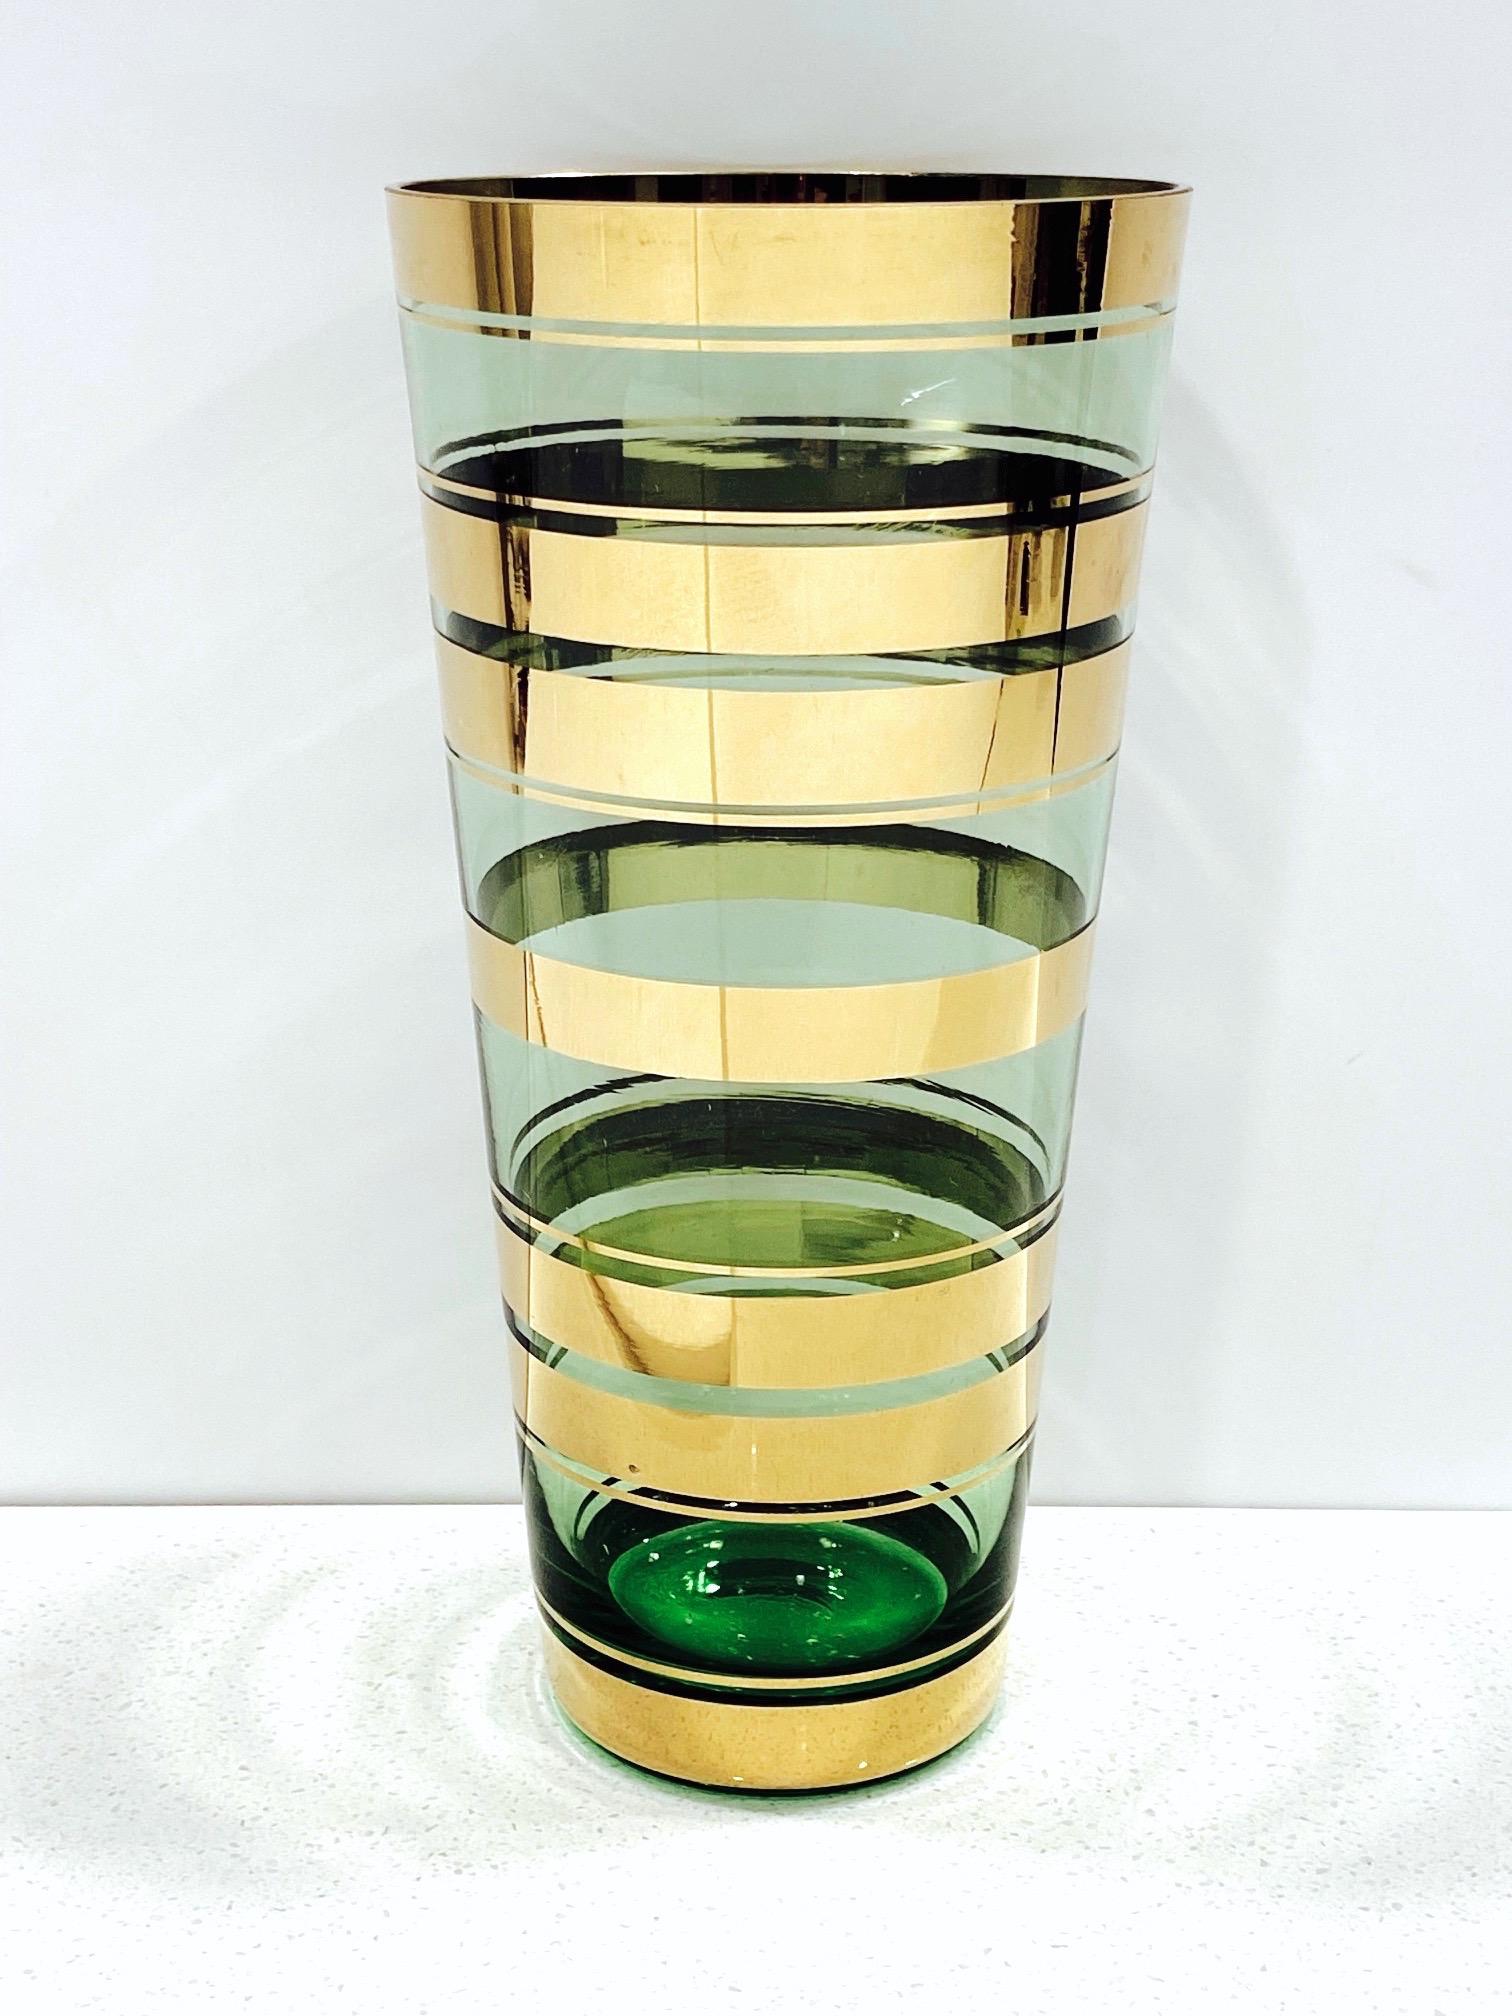 Art Glass Vintage Green Glass Vase with 24-Karat Gold Overlays, Czech Republic, c. 1950's